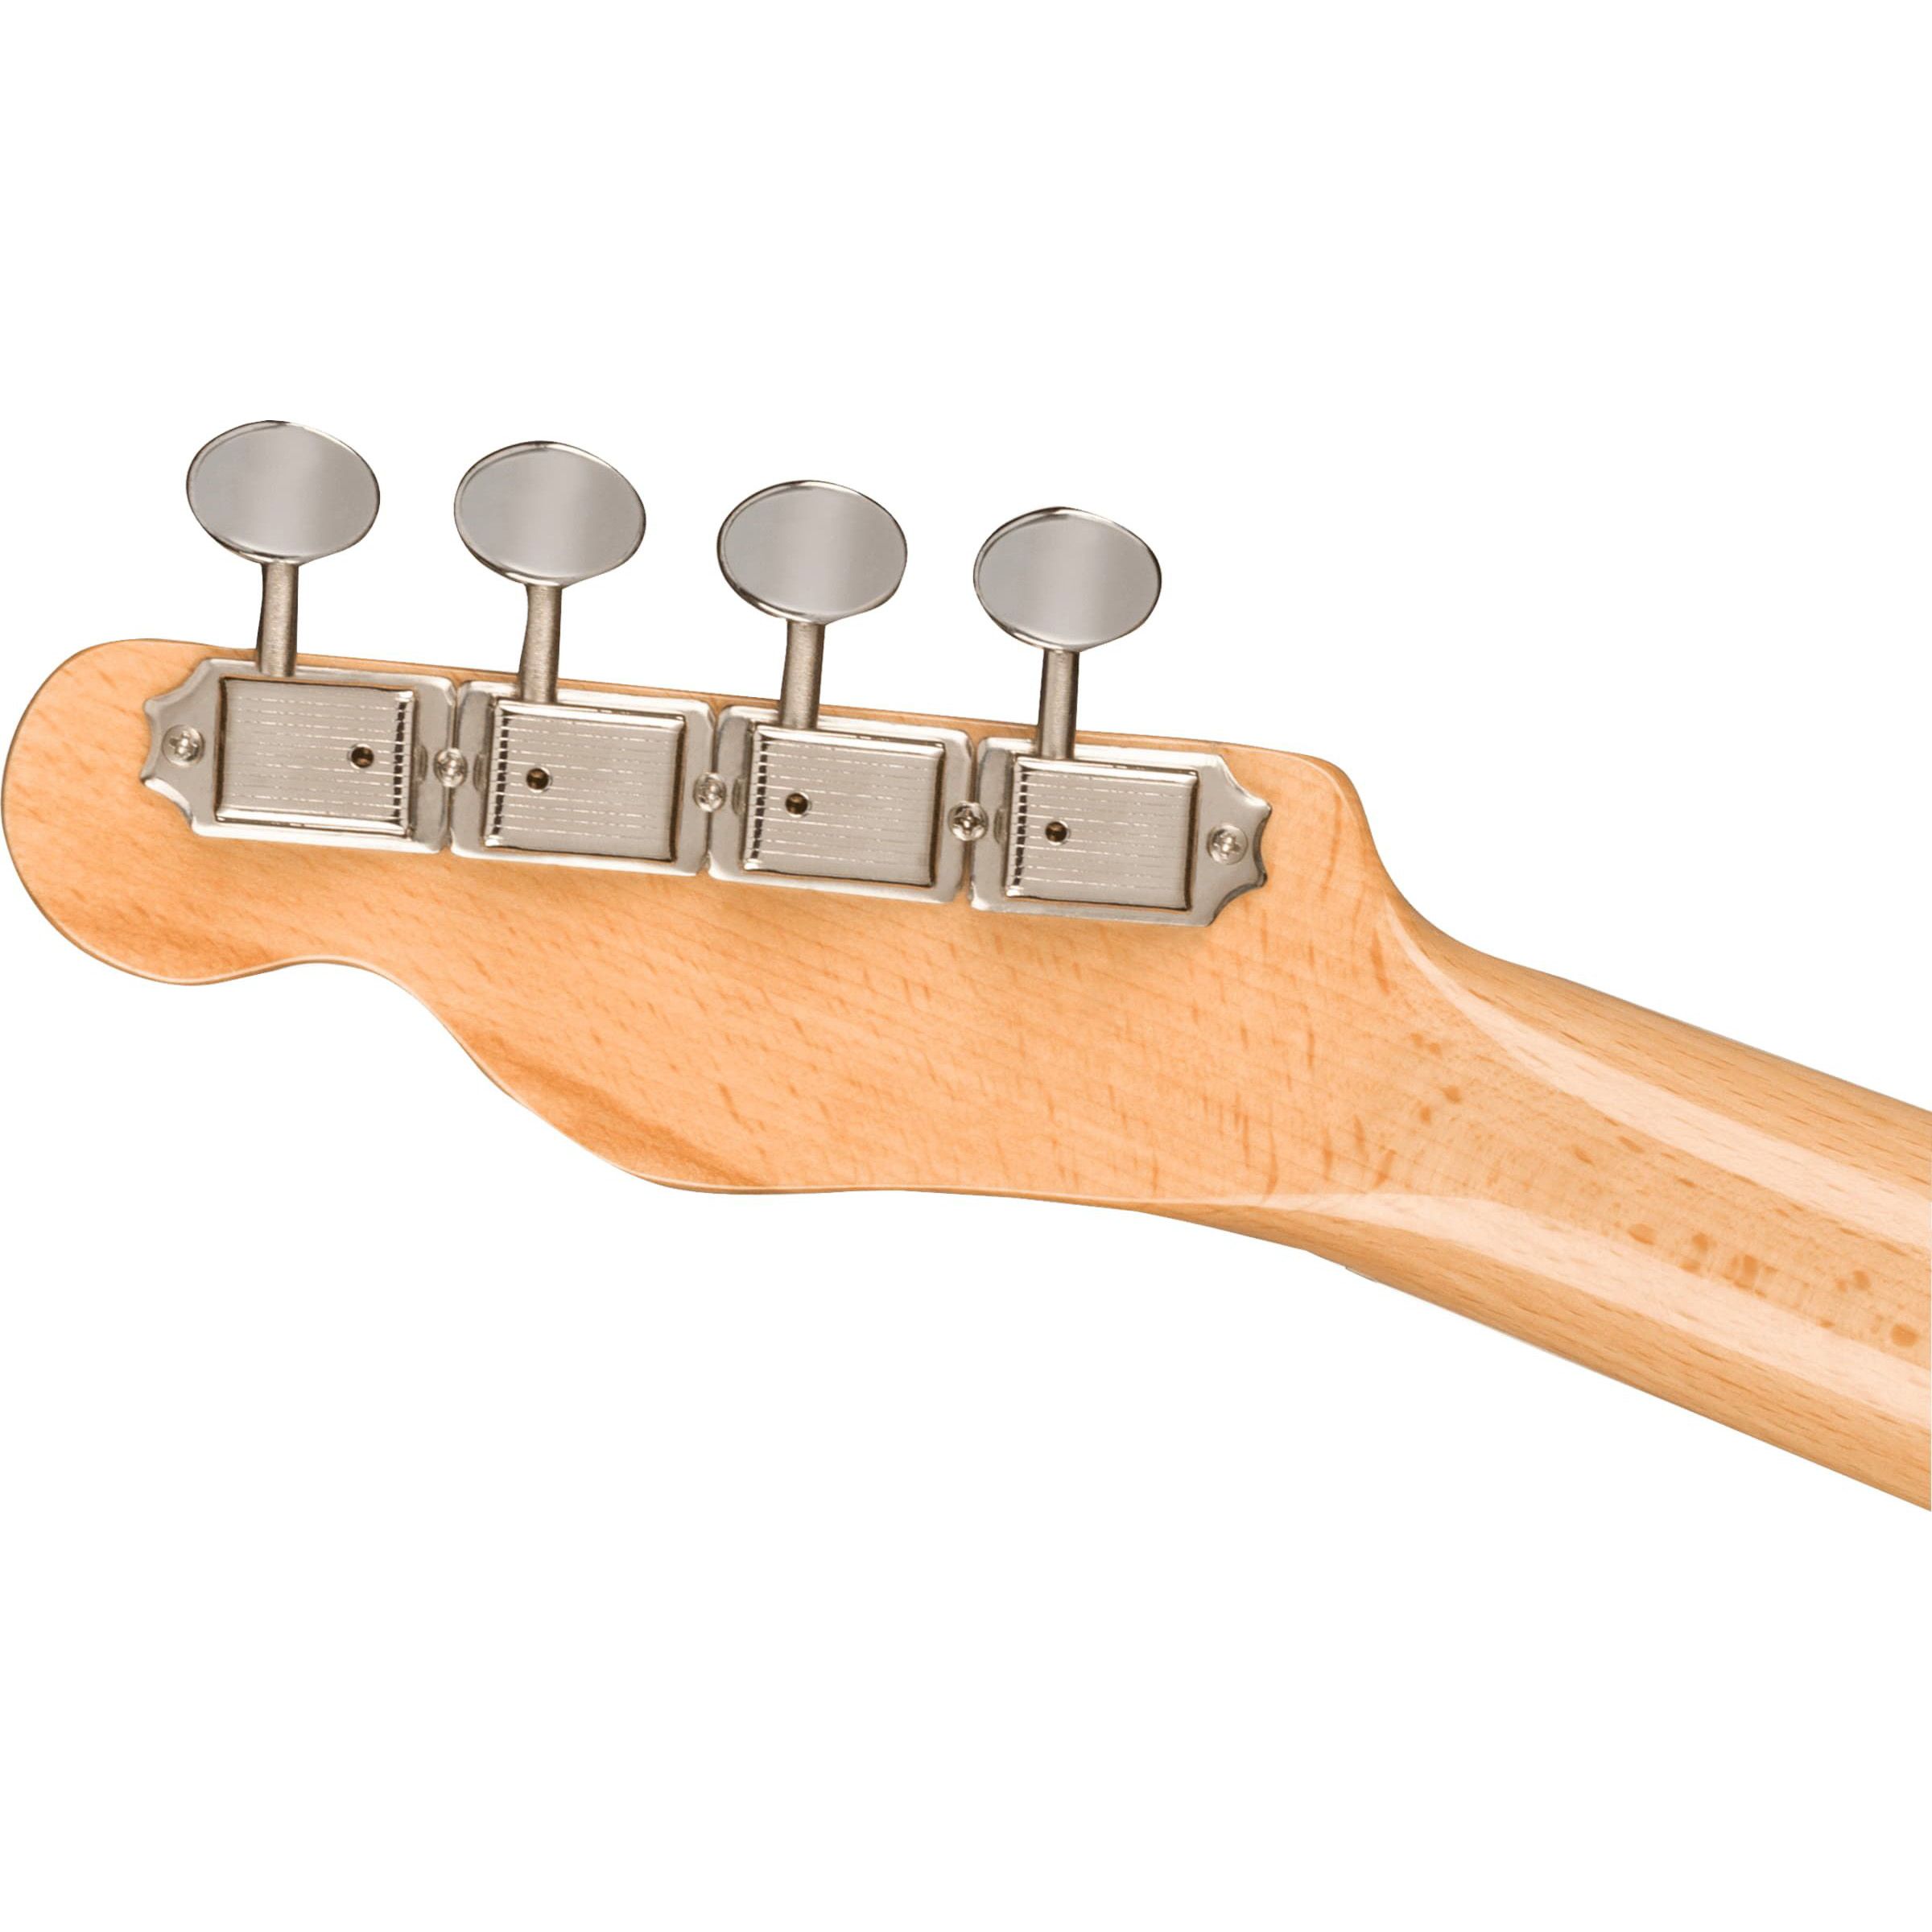 Fender Fullerton Tele Uke Butterscotch Blonde Народные инструменты